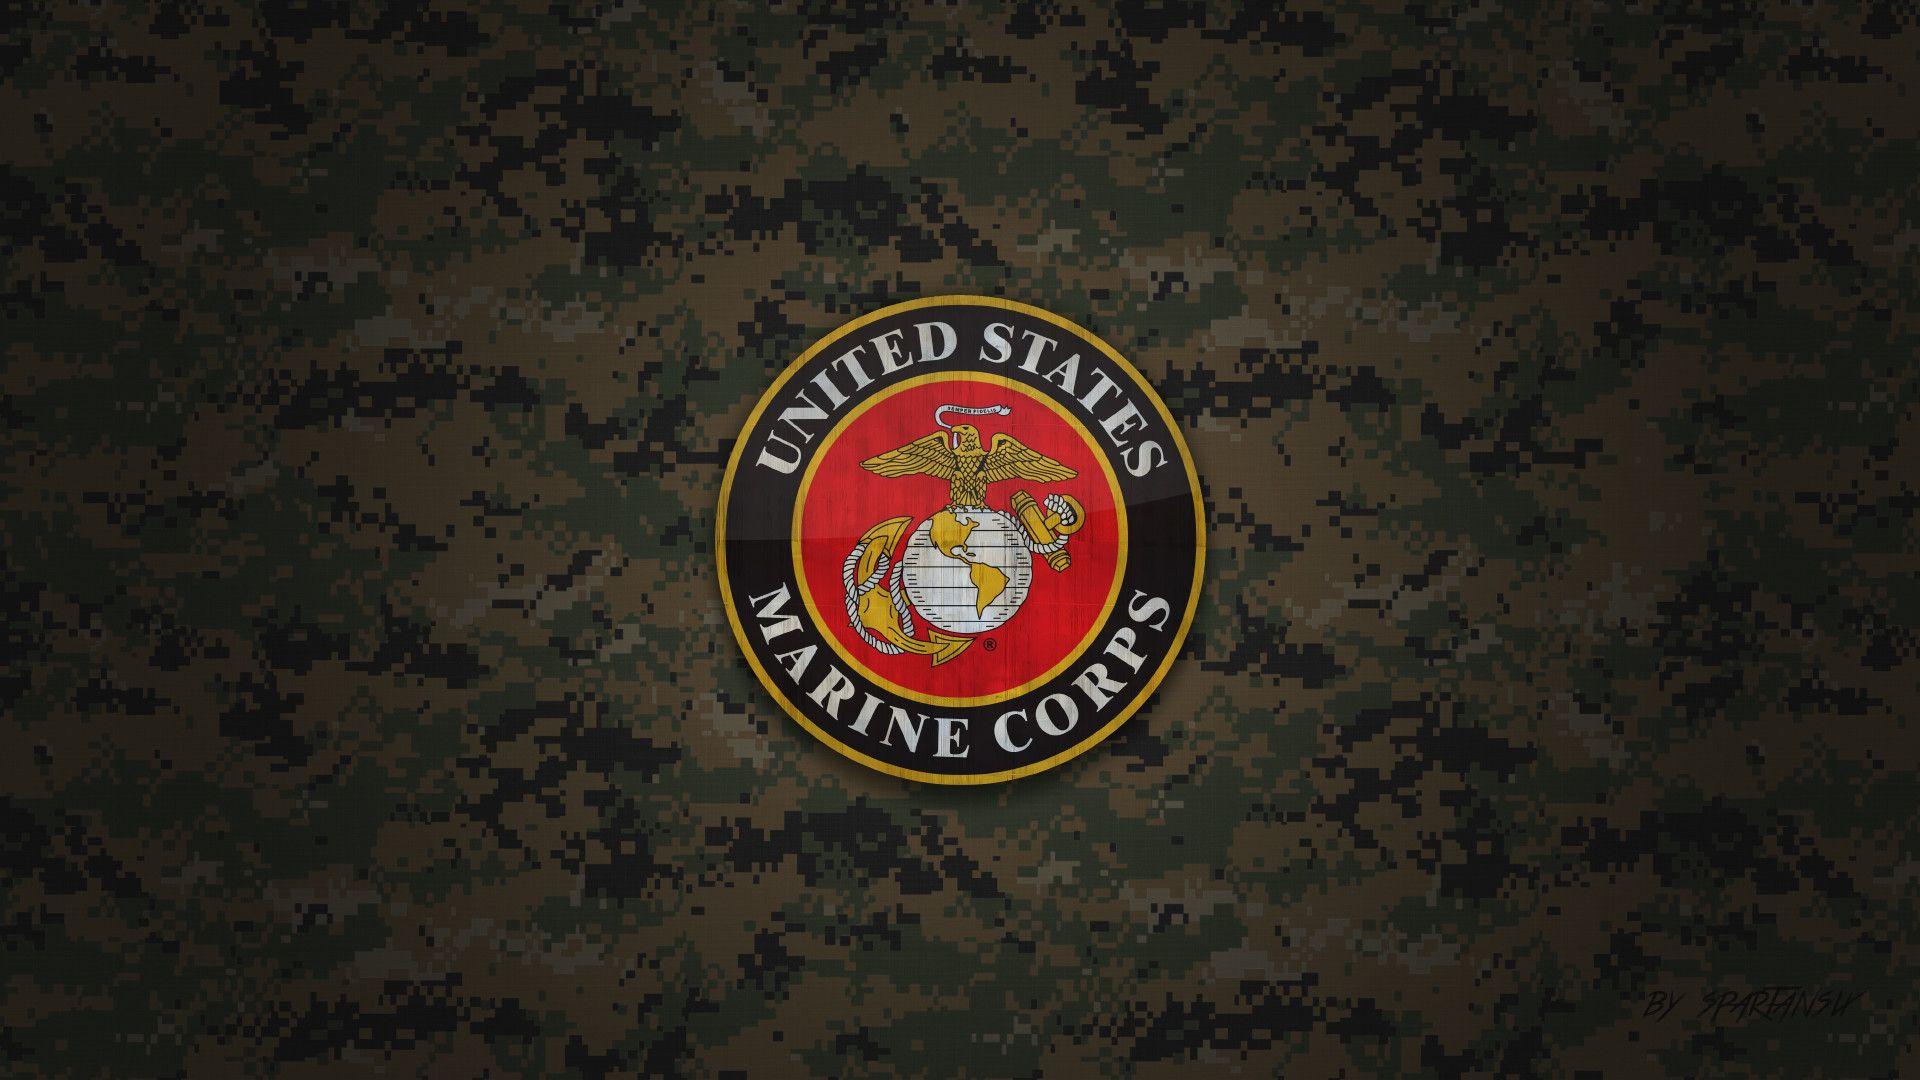 Marines Logo Wallpapers Camo Wallpaper Cave